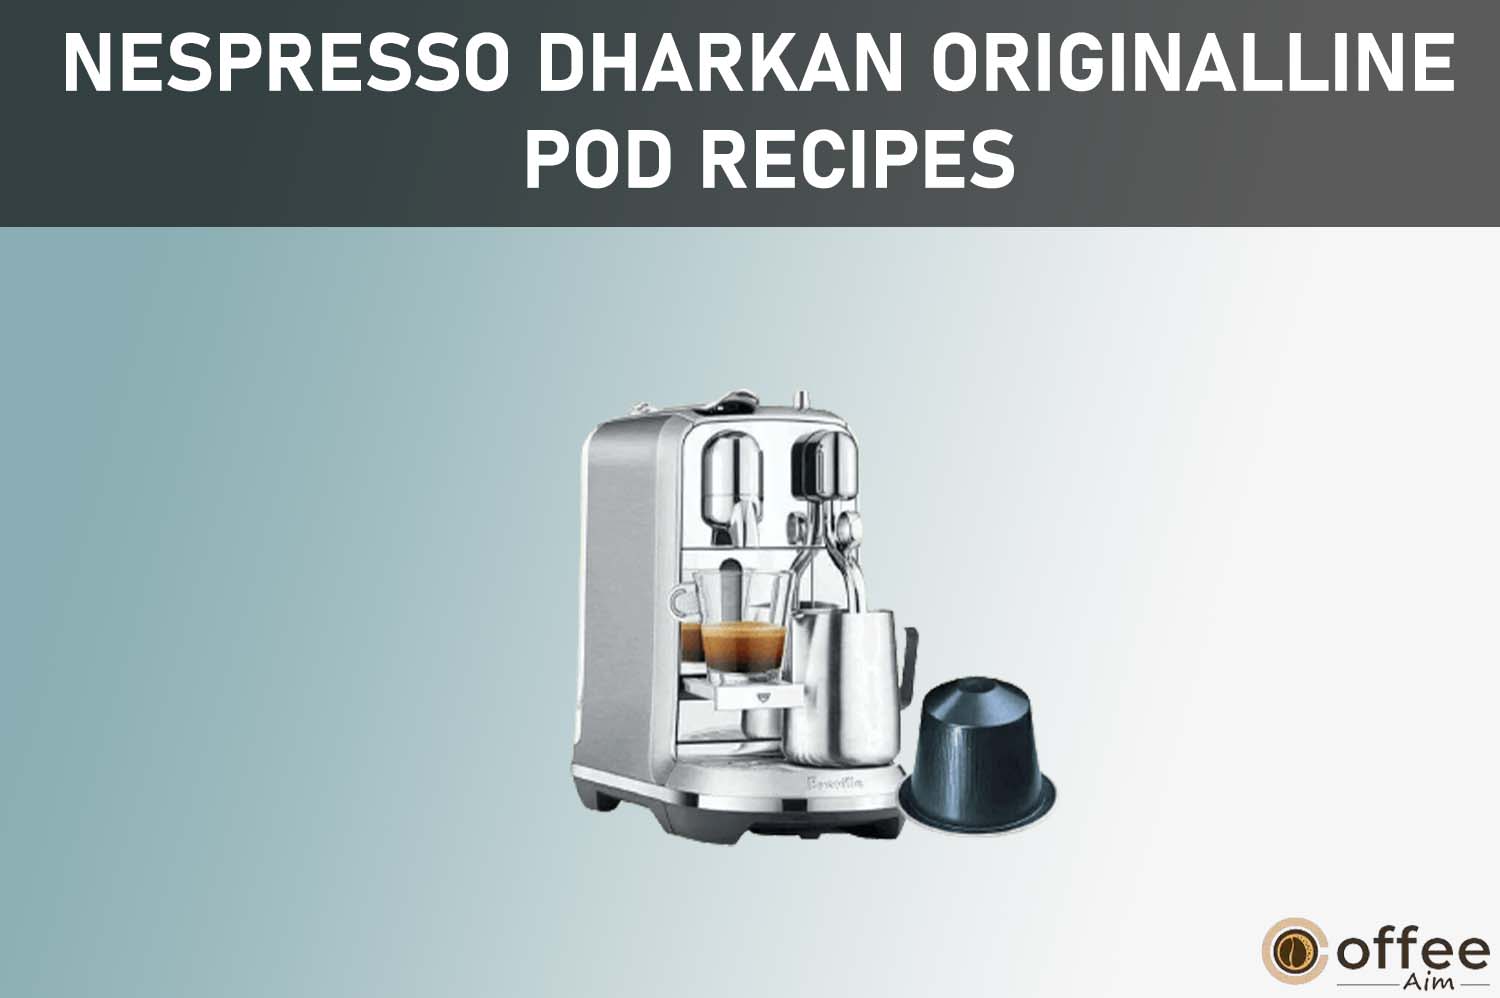 Featured image for the article "Nespresso Dharkan OriginalLine Pod Recipes"